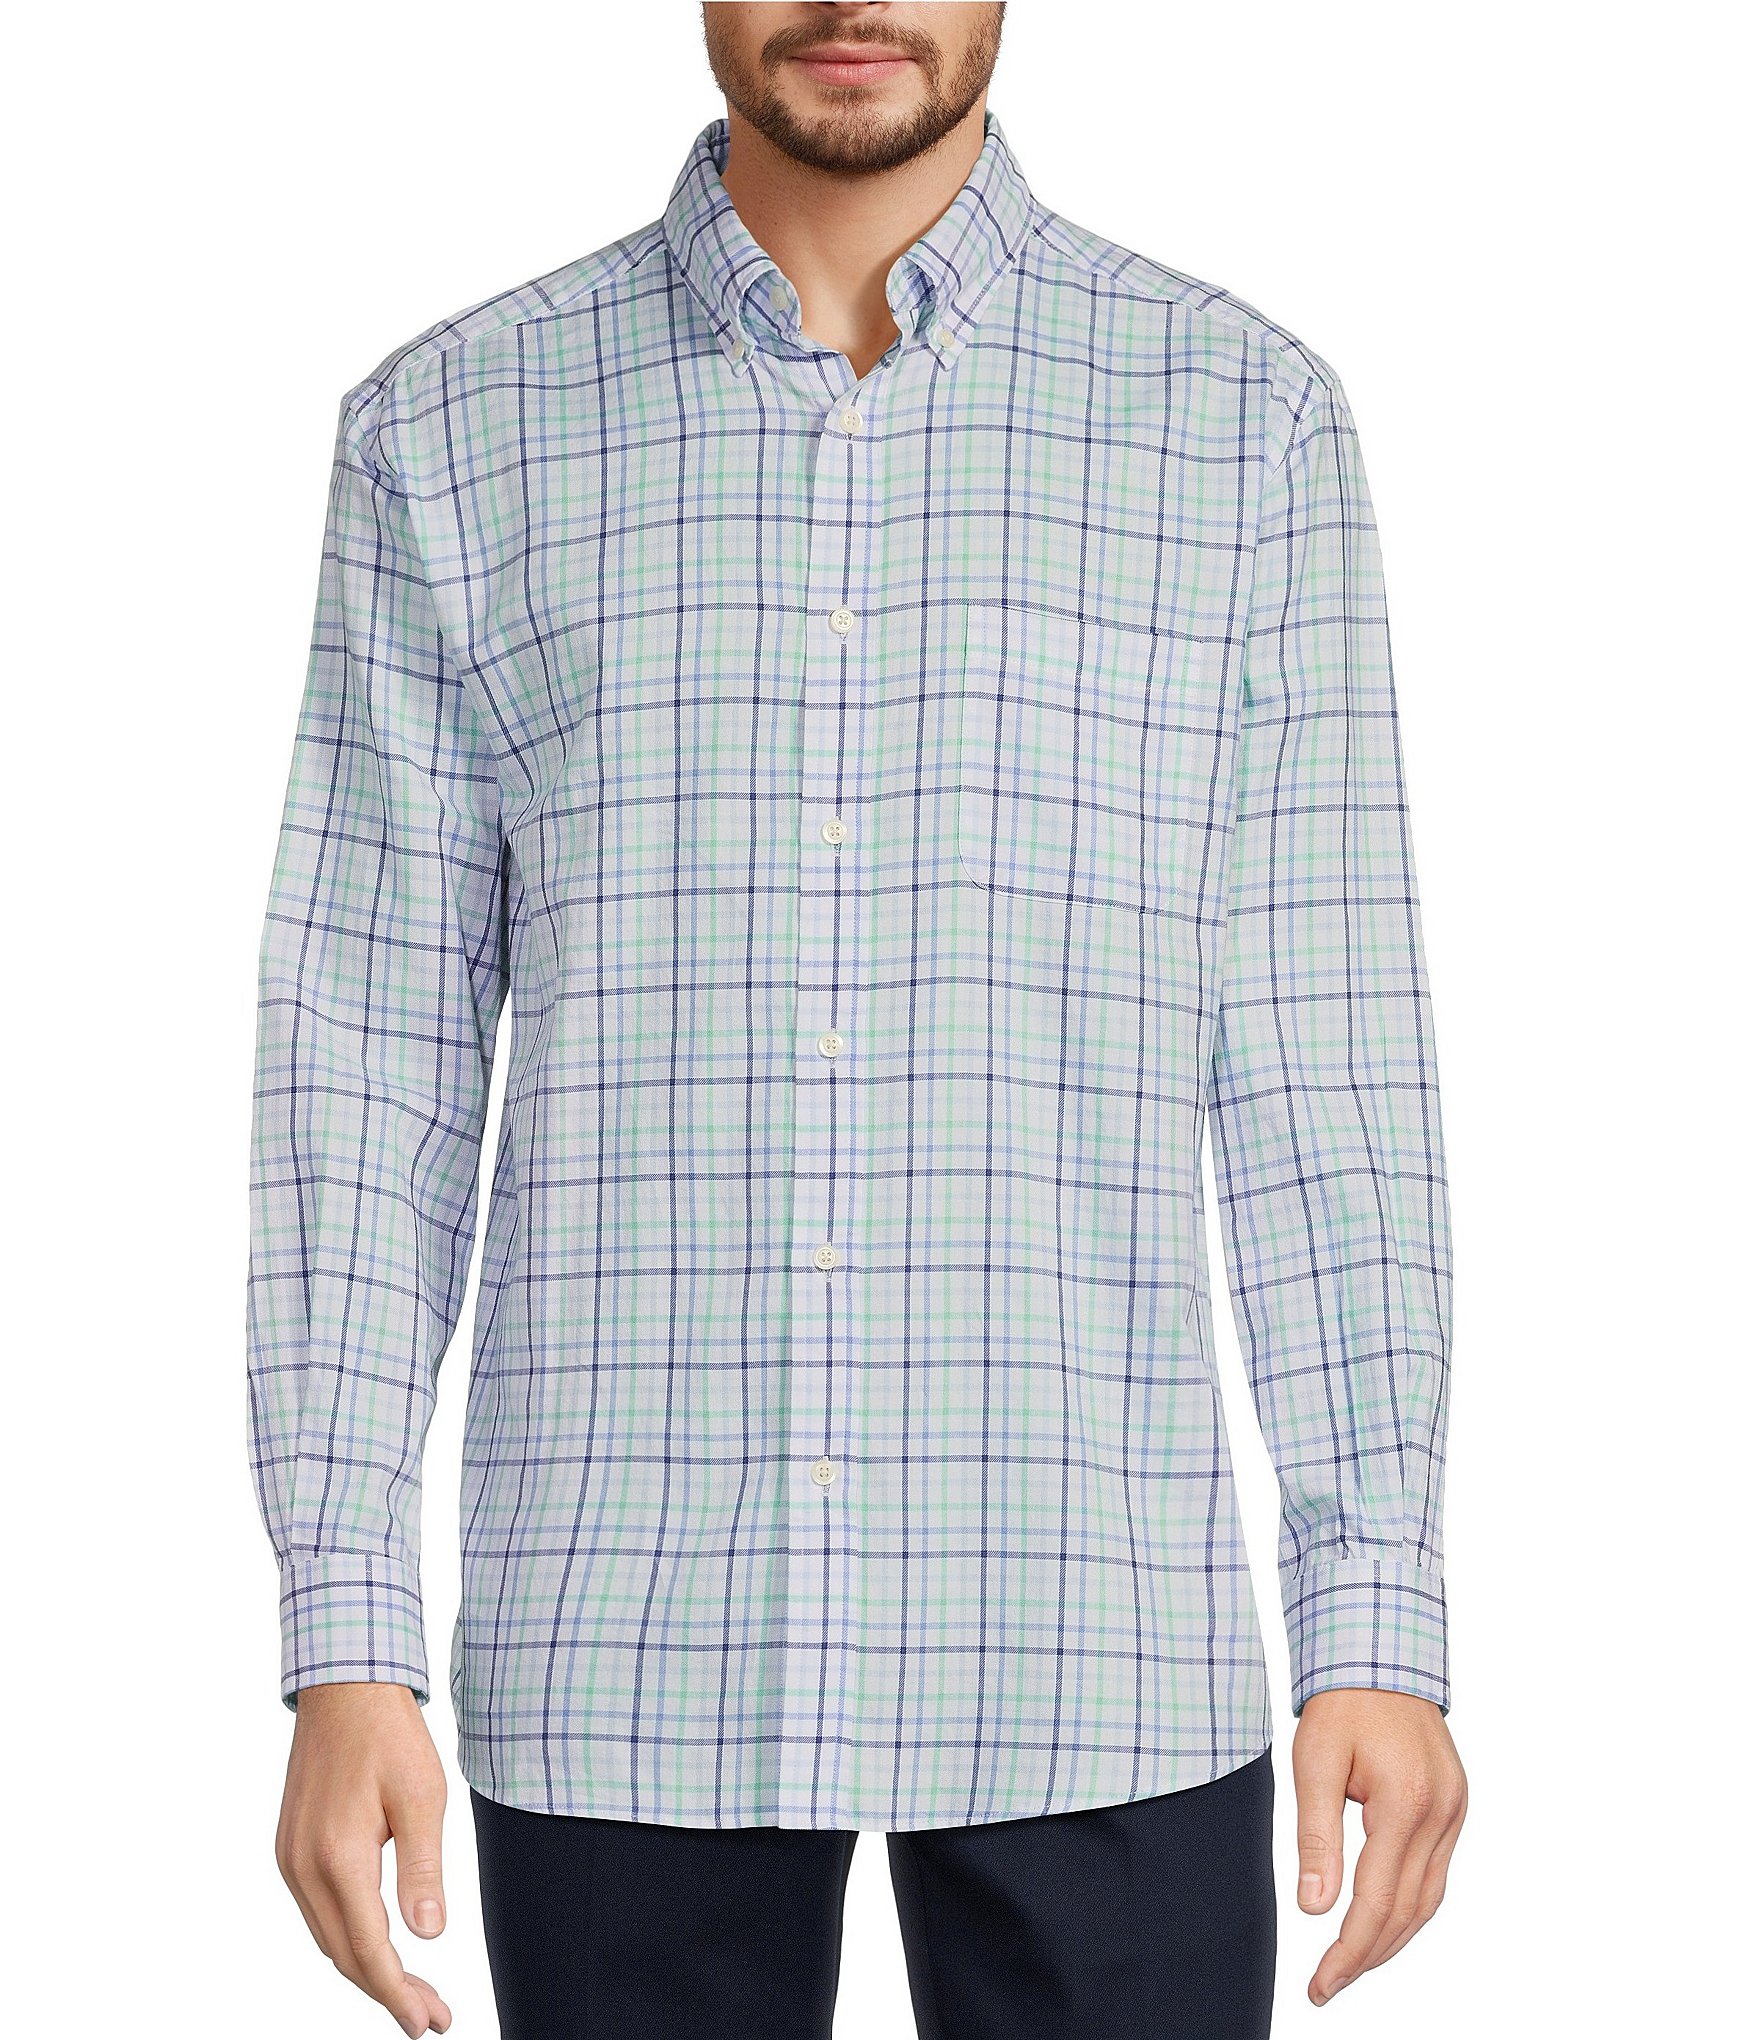 Roundtree & Yorke Long Sleeve Multi Checked Twill Sport Shirt | Dillard's